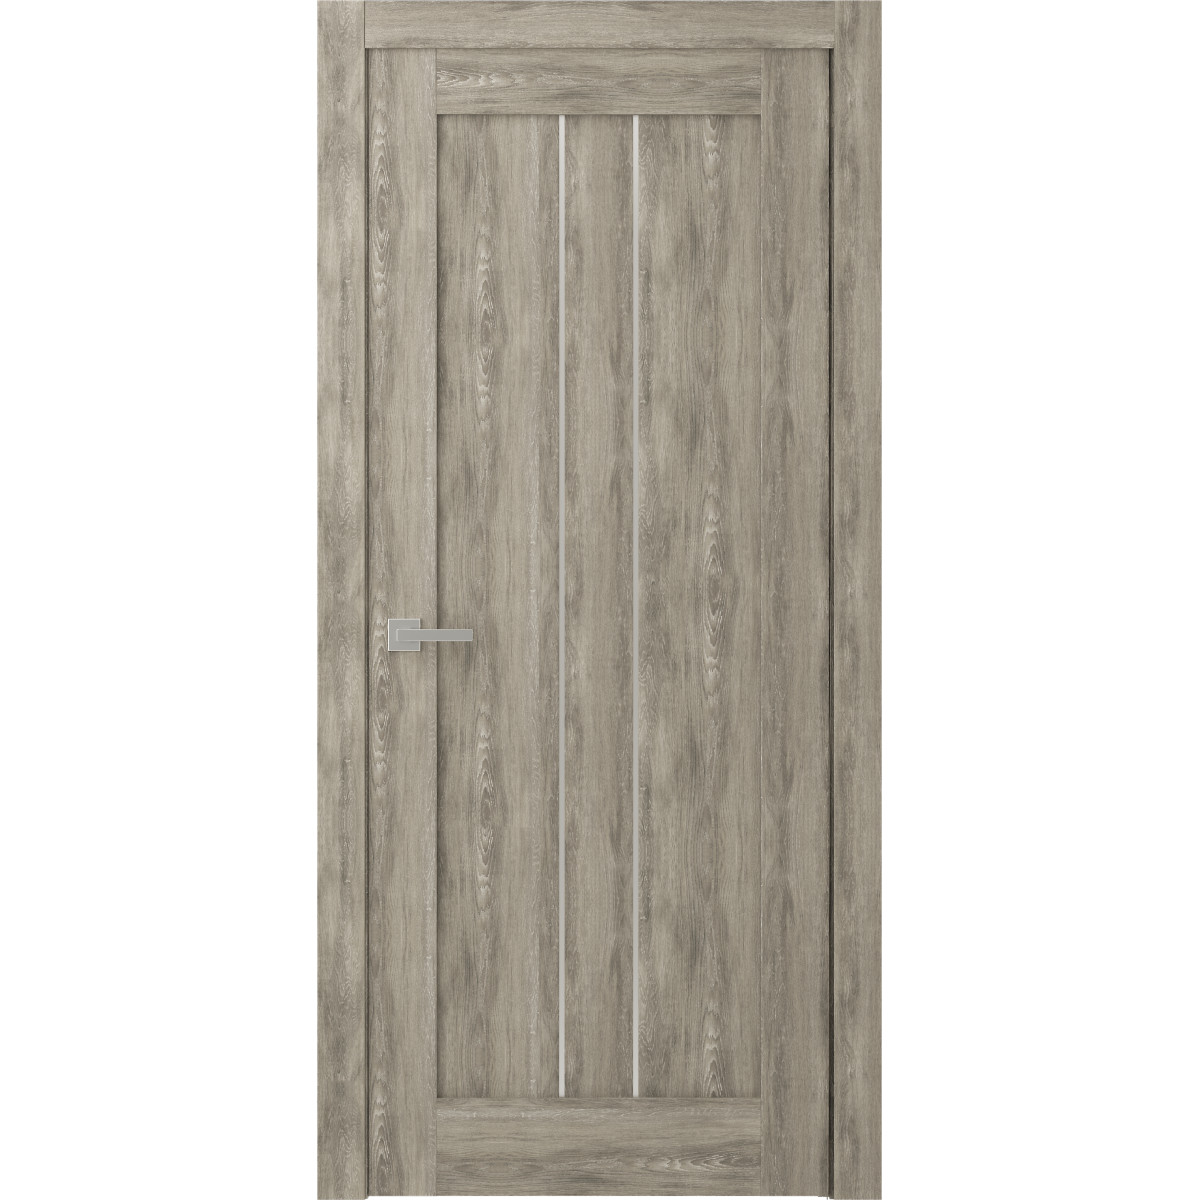 Дверь межкомнатная глухая Челси 60x200 см, экошпон, цвет дуб медовый